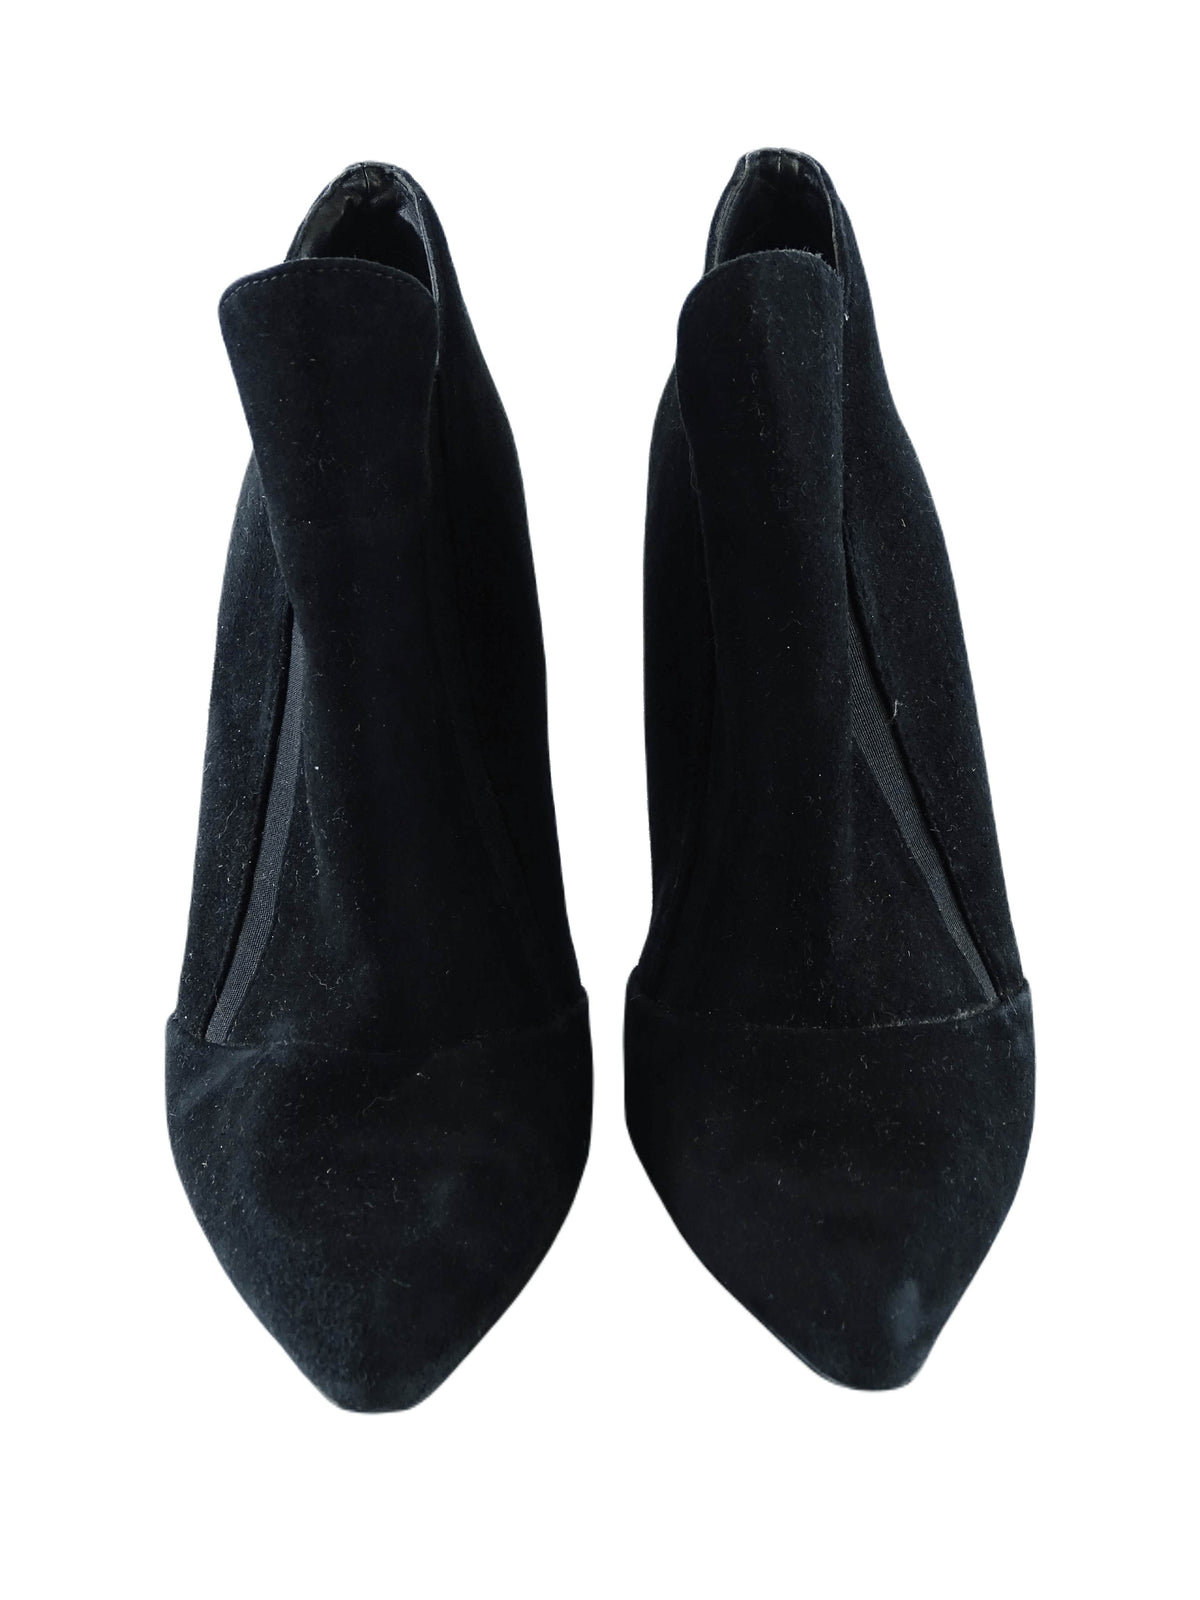 Zara Black Boots 36